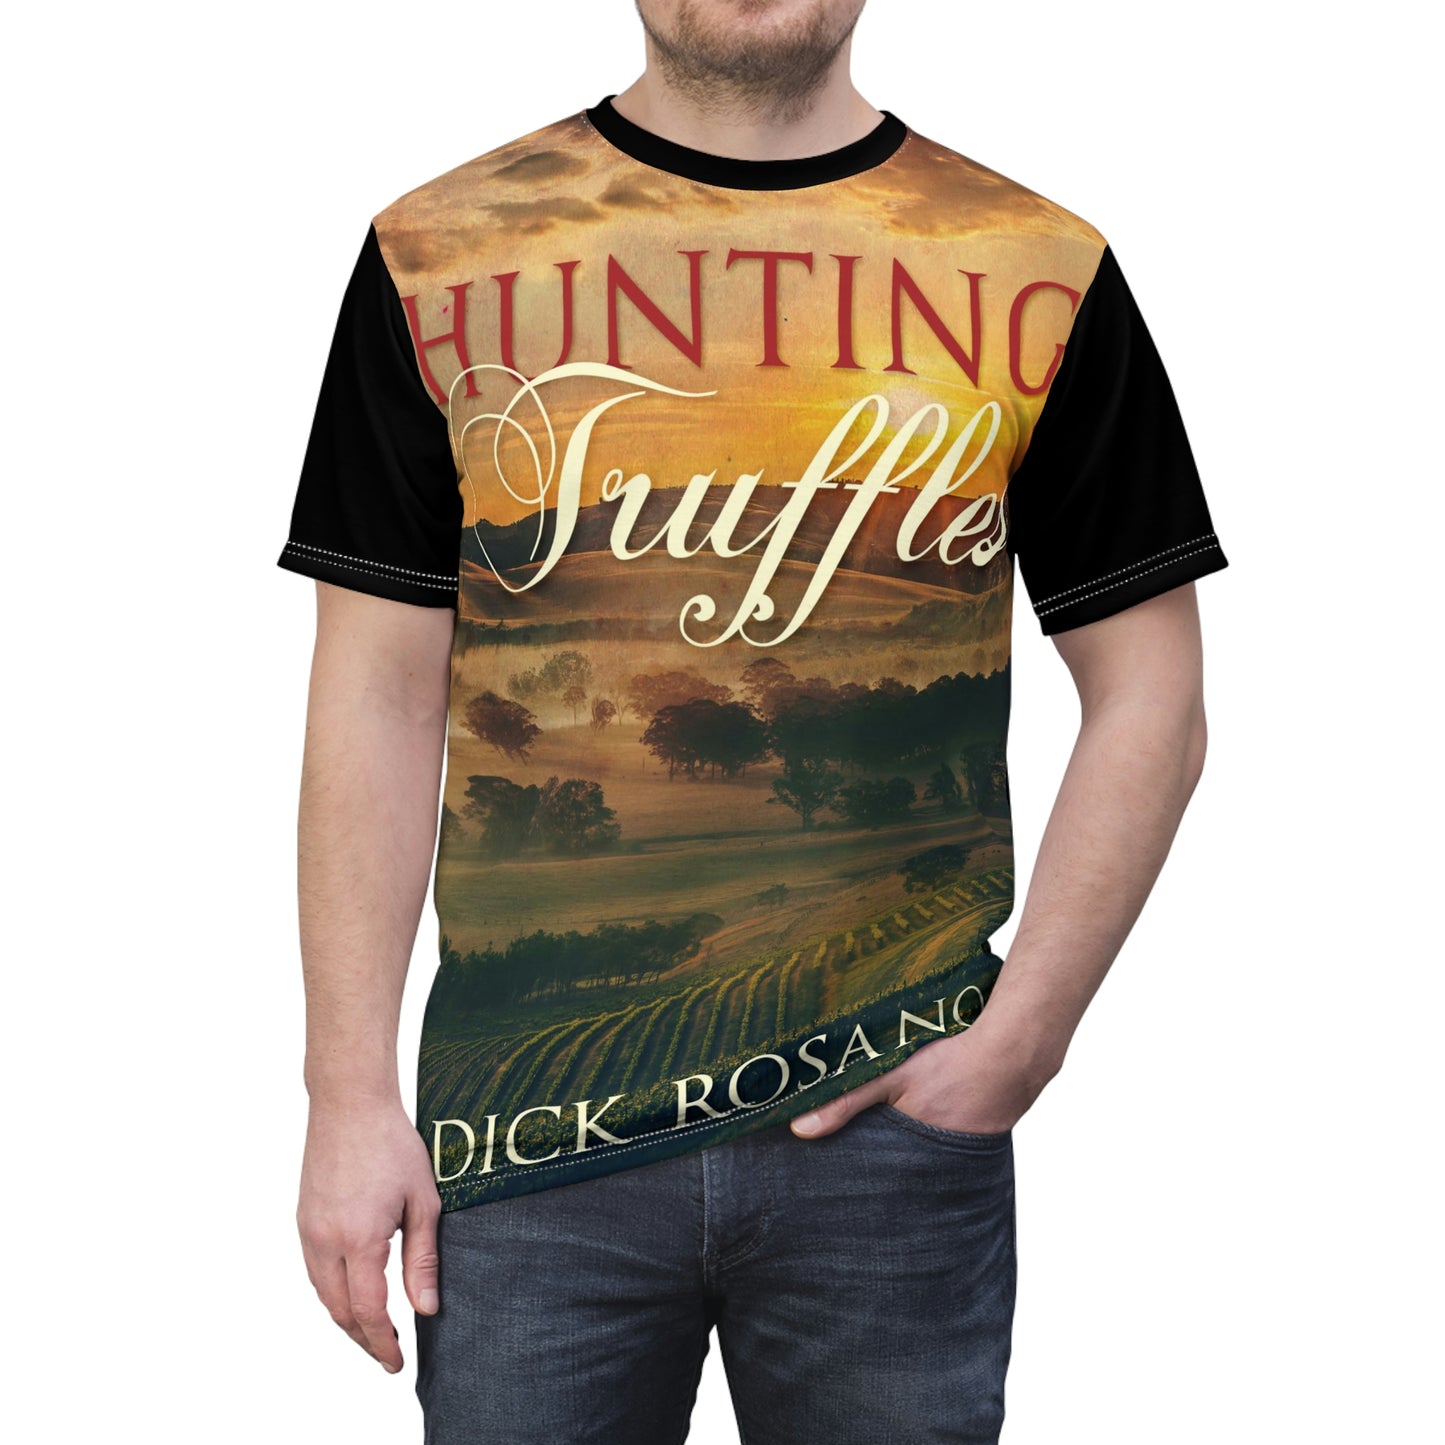 Hunting Truffles - Unisex All-Over Print Cut & Sew T-Shirt